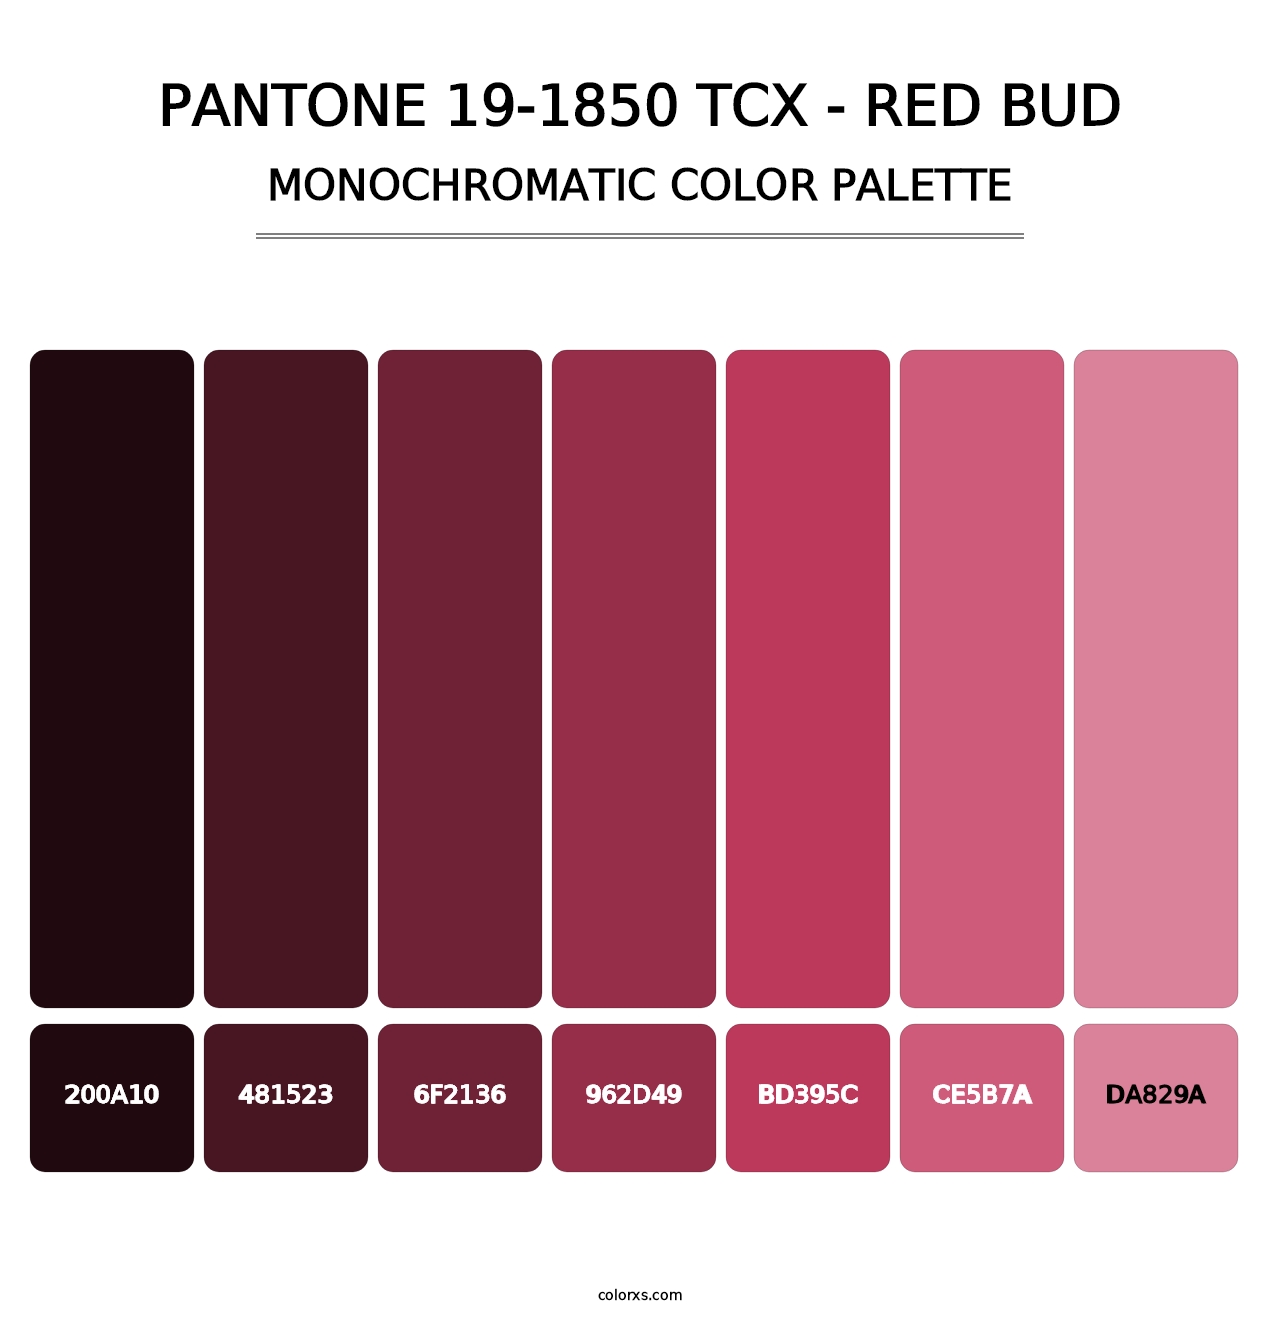 PANTONE 19-1850 TCX - Red Bud - Monochromatic Color Palette